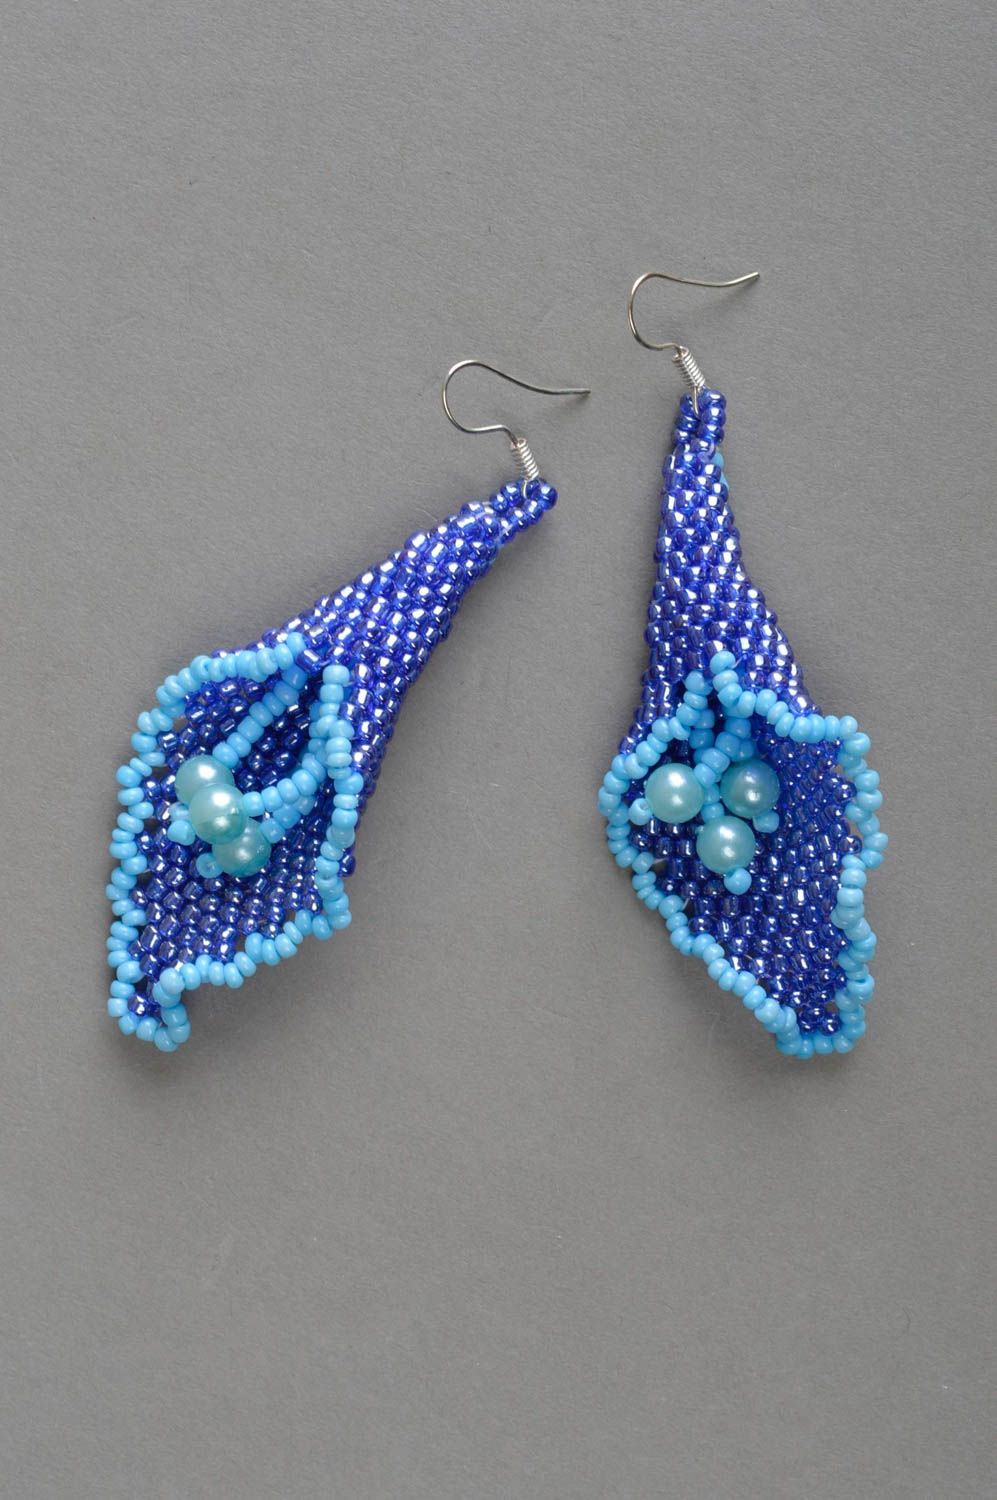 Stylish handmade beaded earrings fashion accessories bead weaving ideas photo 2